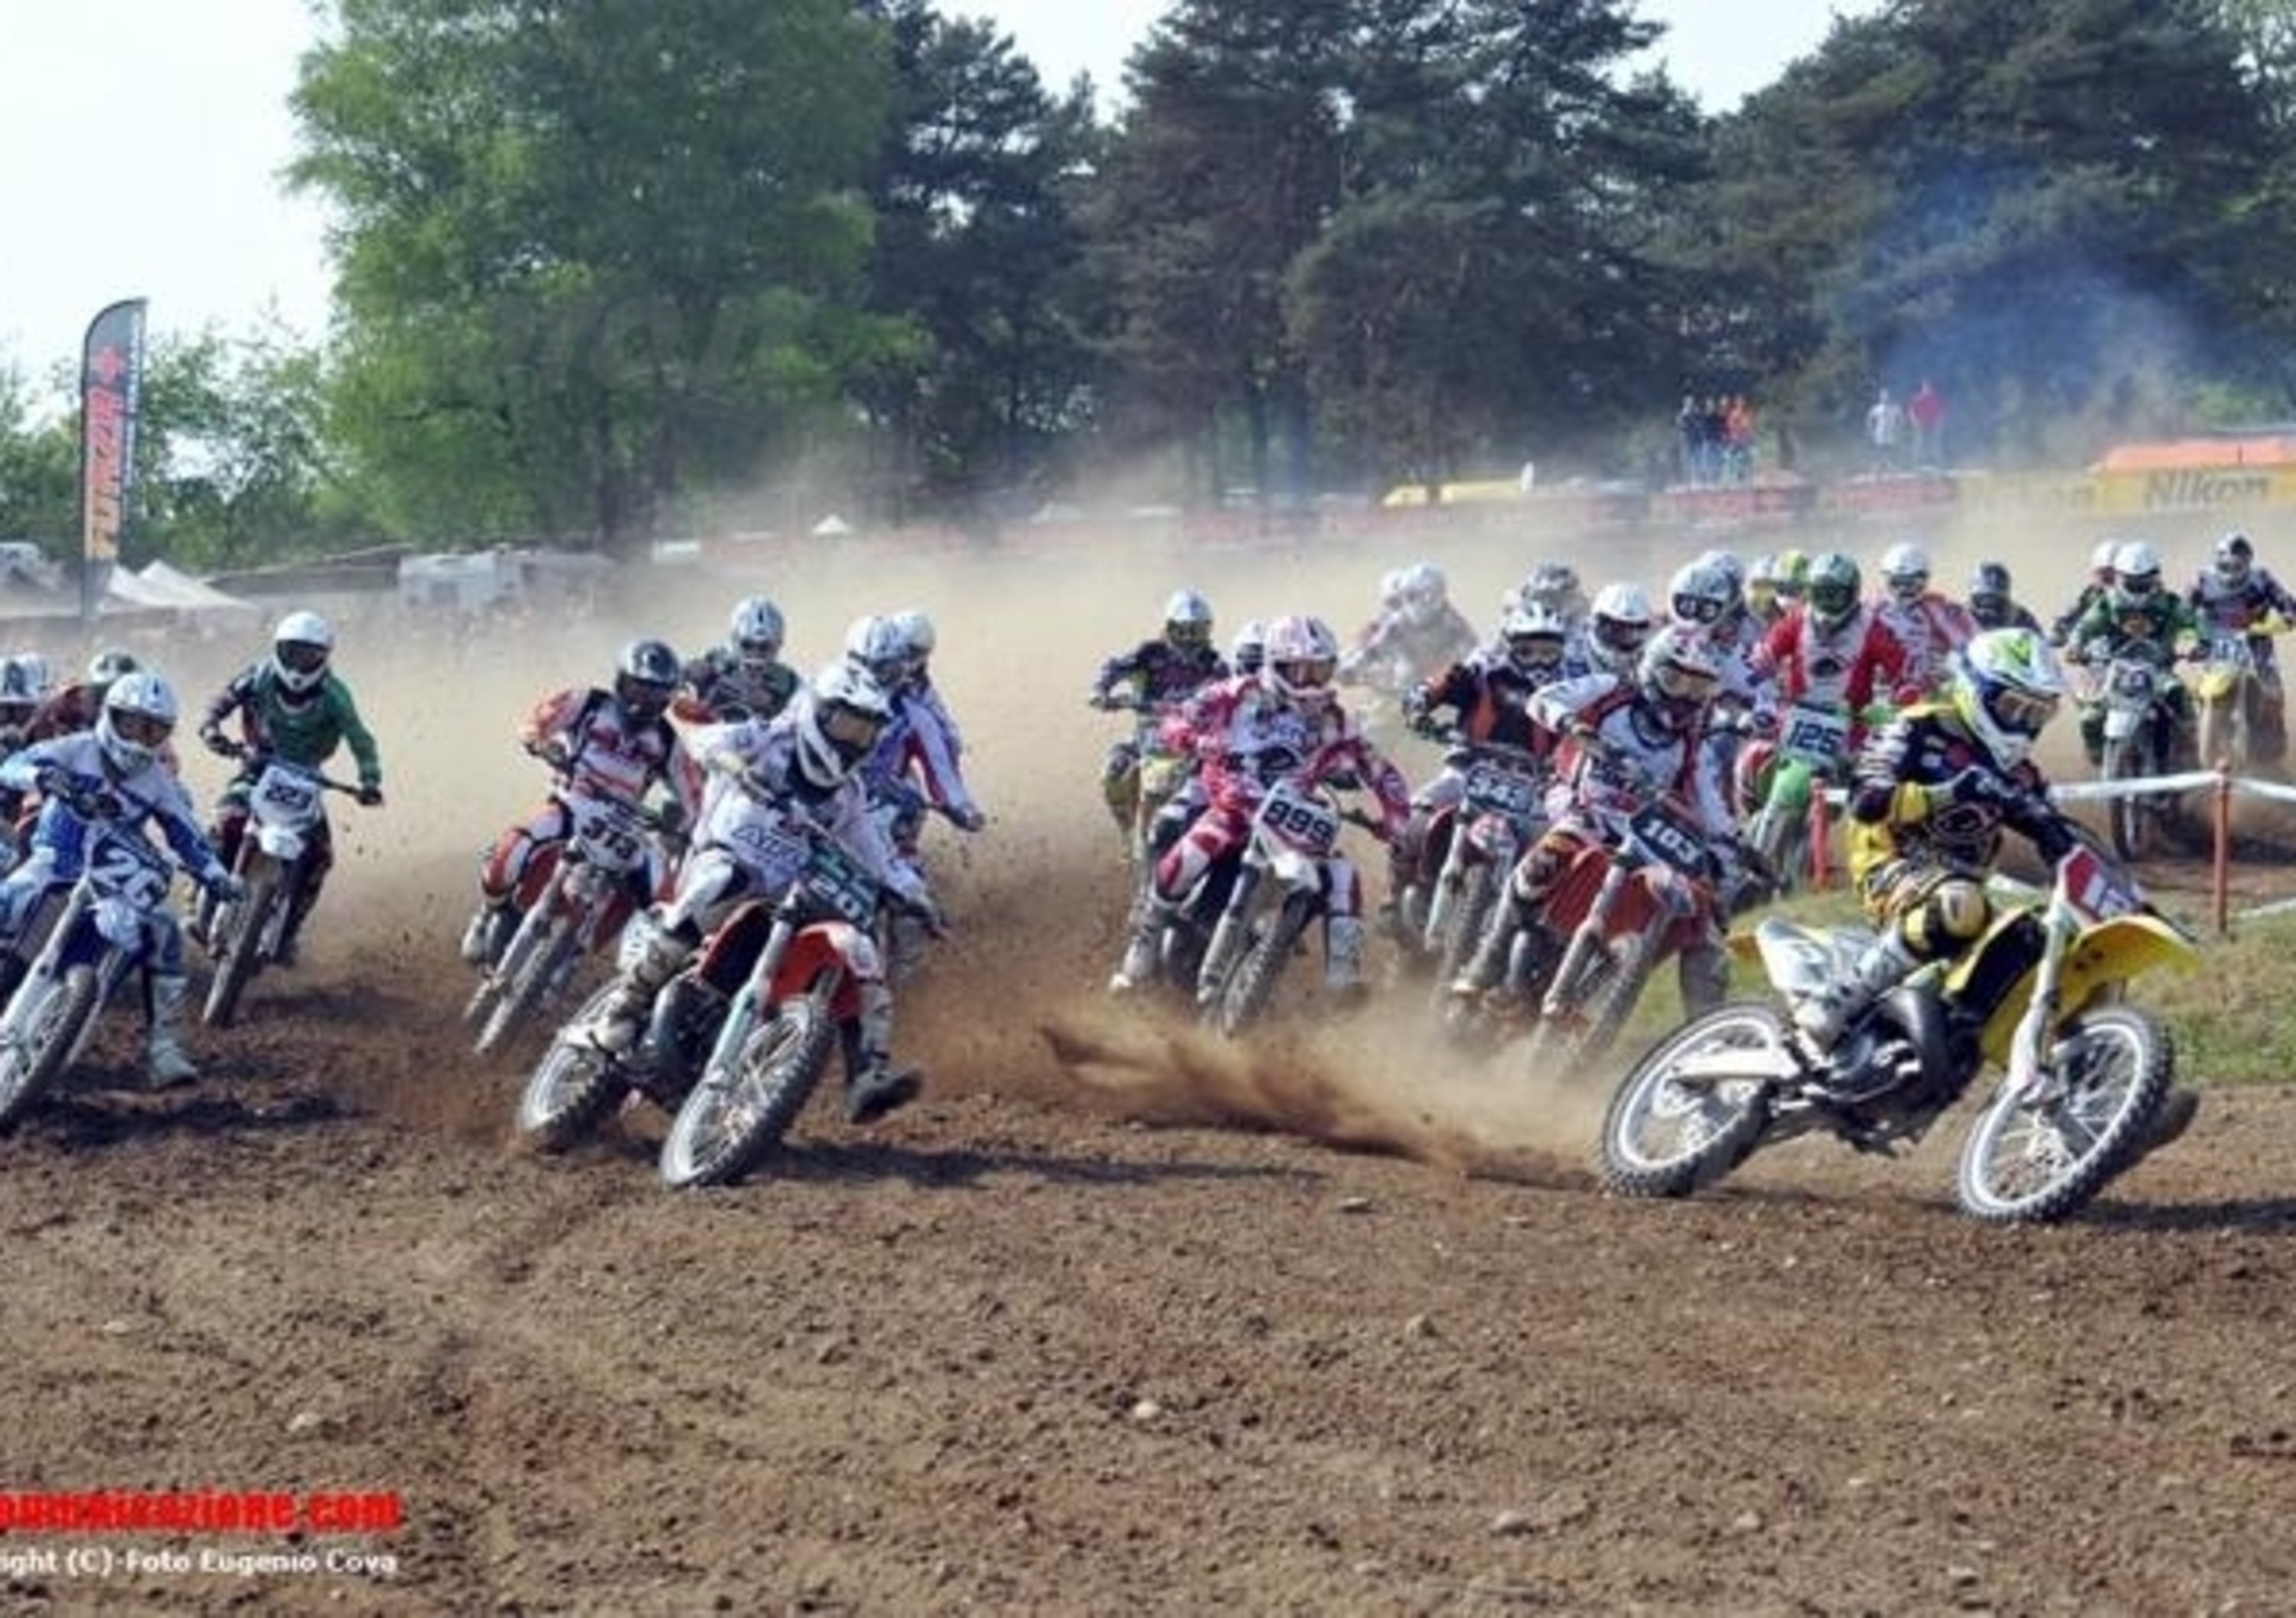 Campionato Italiano Motocross, vincono Bracesco, Tonkov e Zecchina